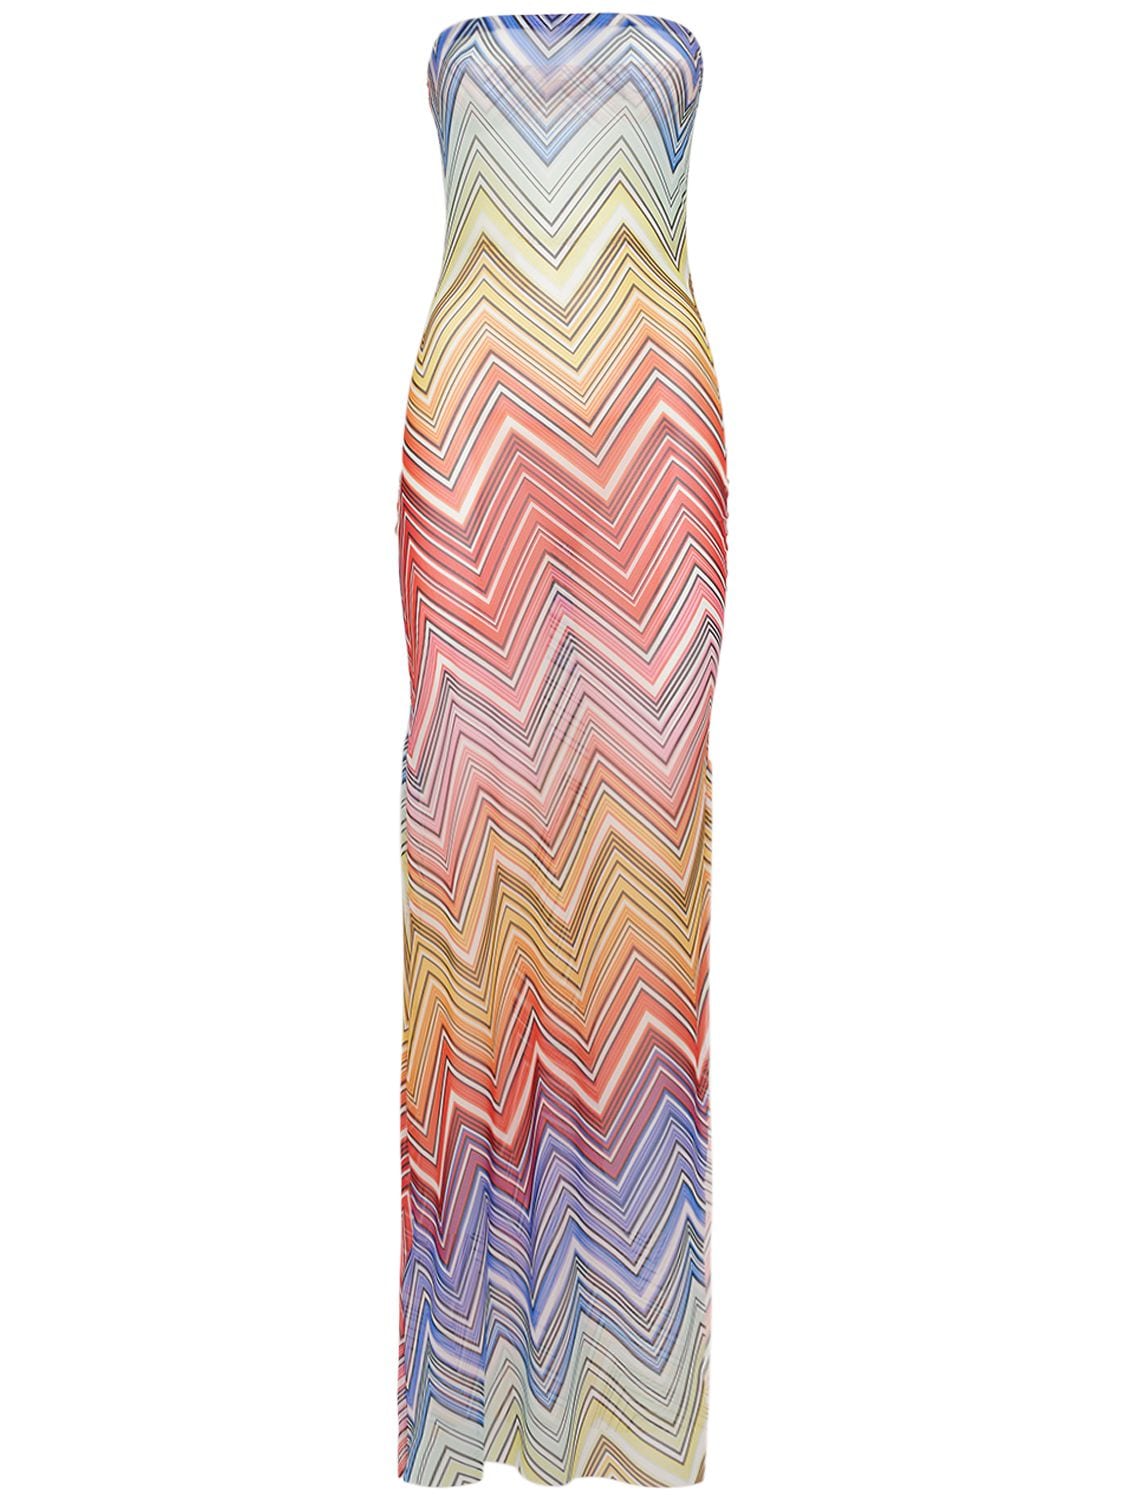 Image of Chevron Print Tulle Long Tube Dress